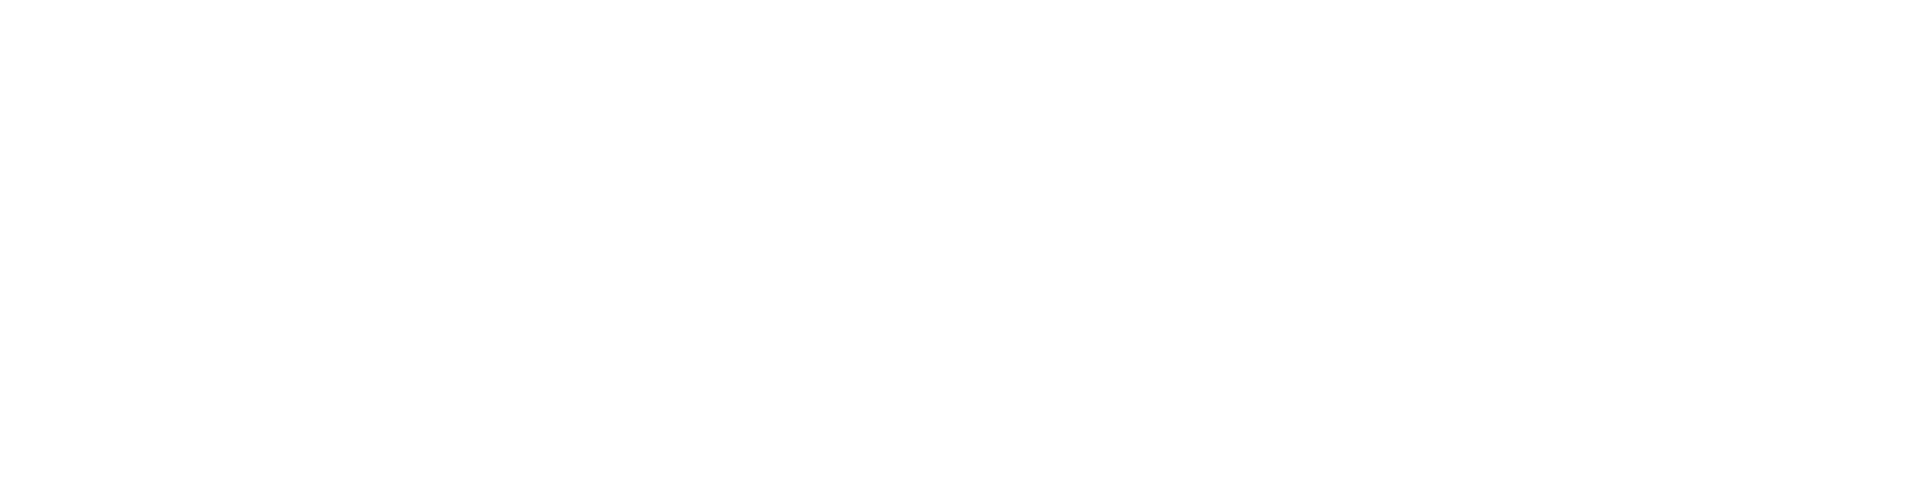 Airthings_Logo_Horizontal_White